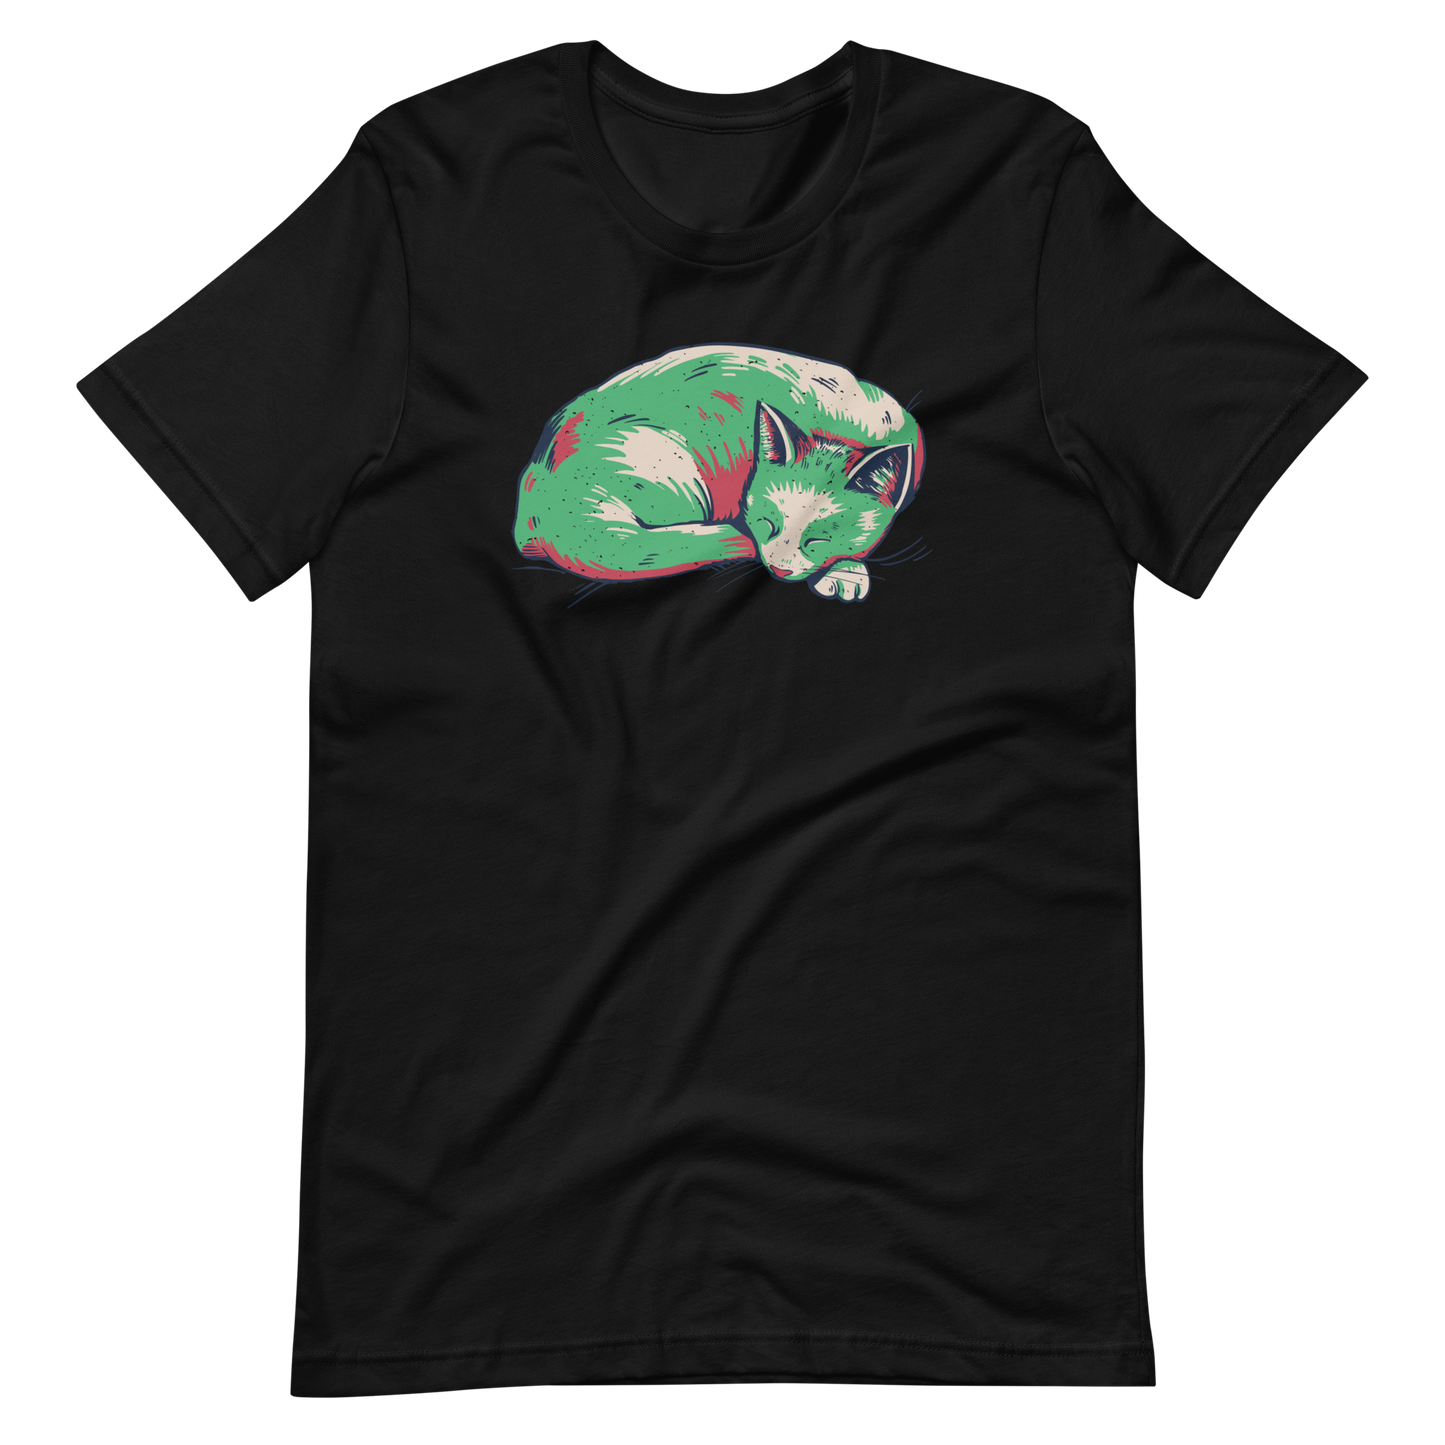 Sleeping panda bedroom | Unisex t-shirt